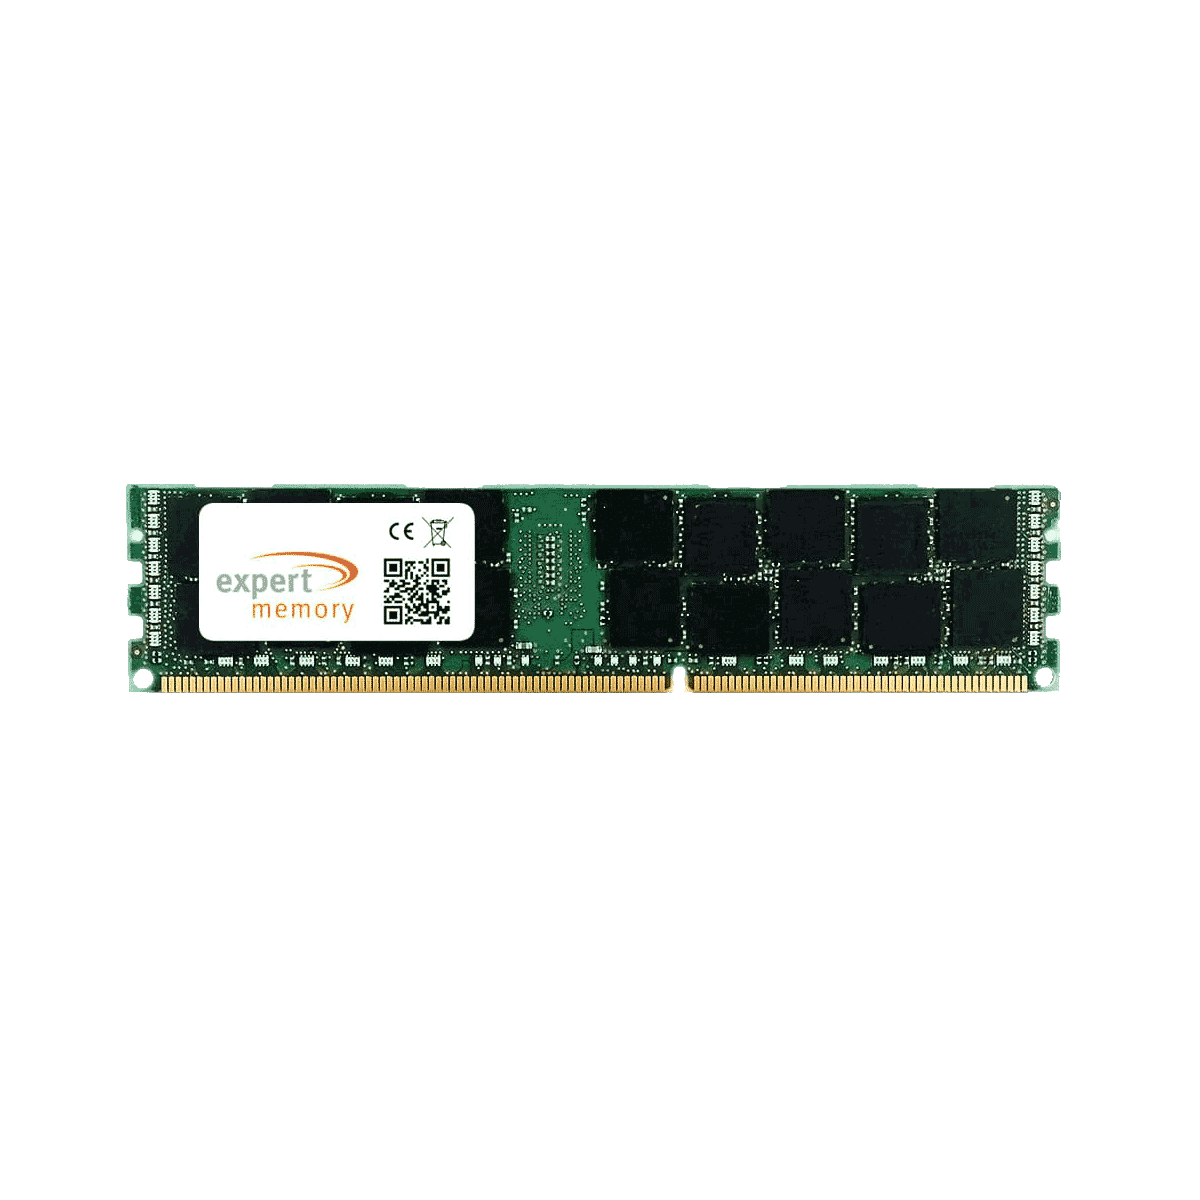 LRDIMM 32GB 1600 Memory Upgrade MEMORY EXPERT RAM GB G2 DDR3 4000 4Rx4 Asus Server ESC 32